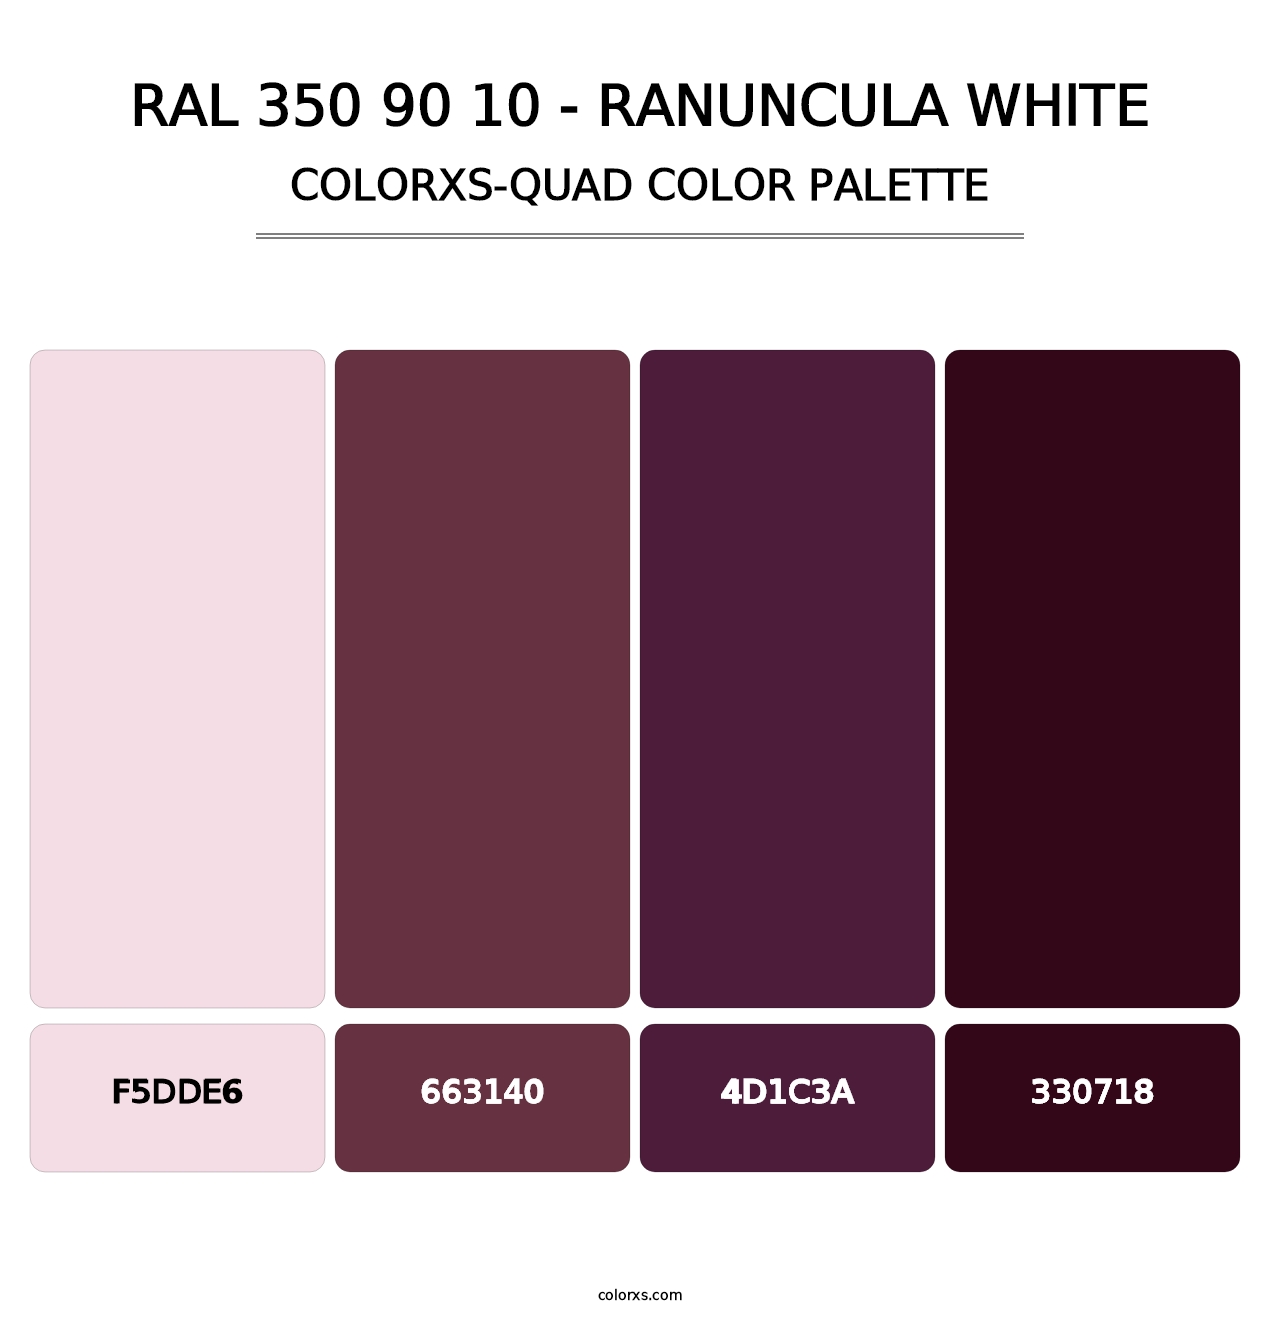 RAL 350 90 10 - Ranuncula White - Colorxs Quad Palette